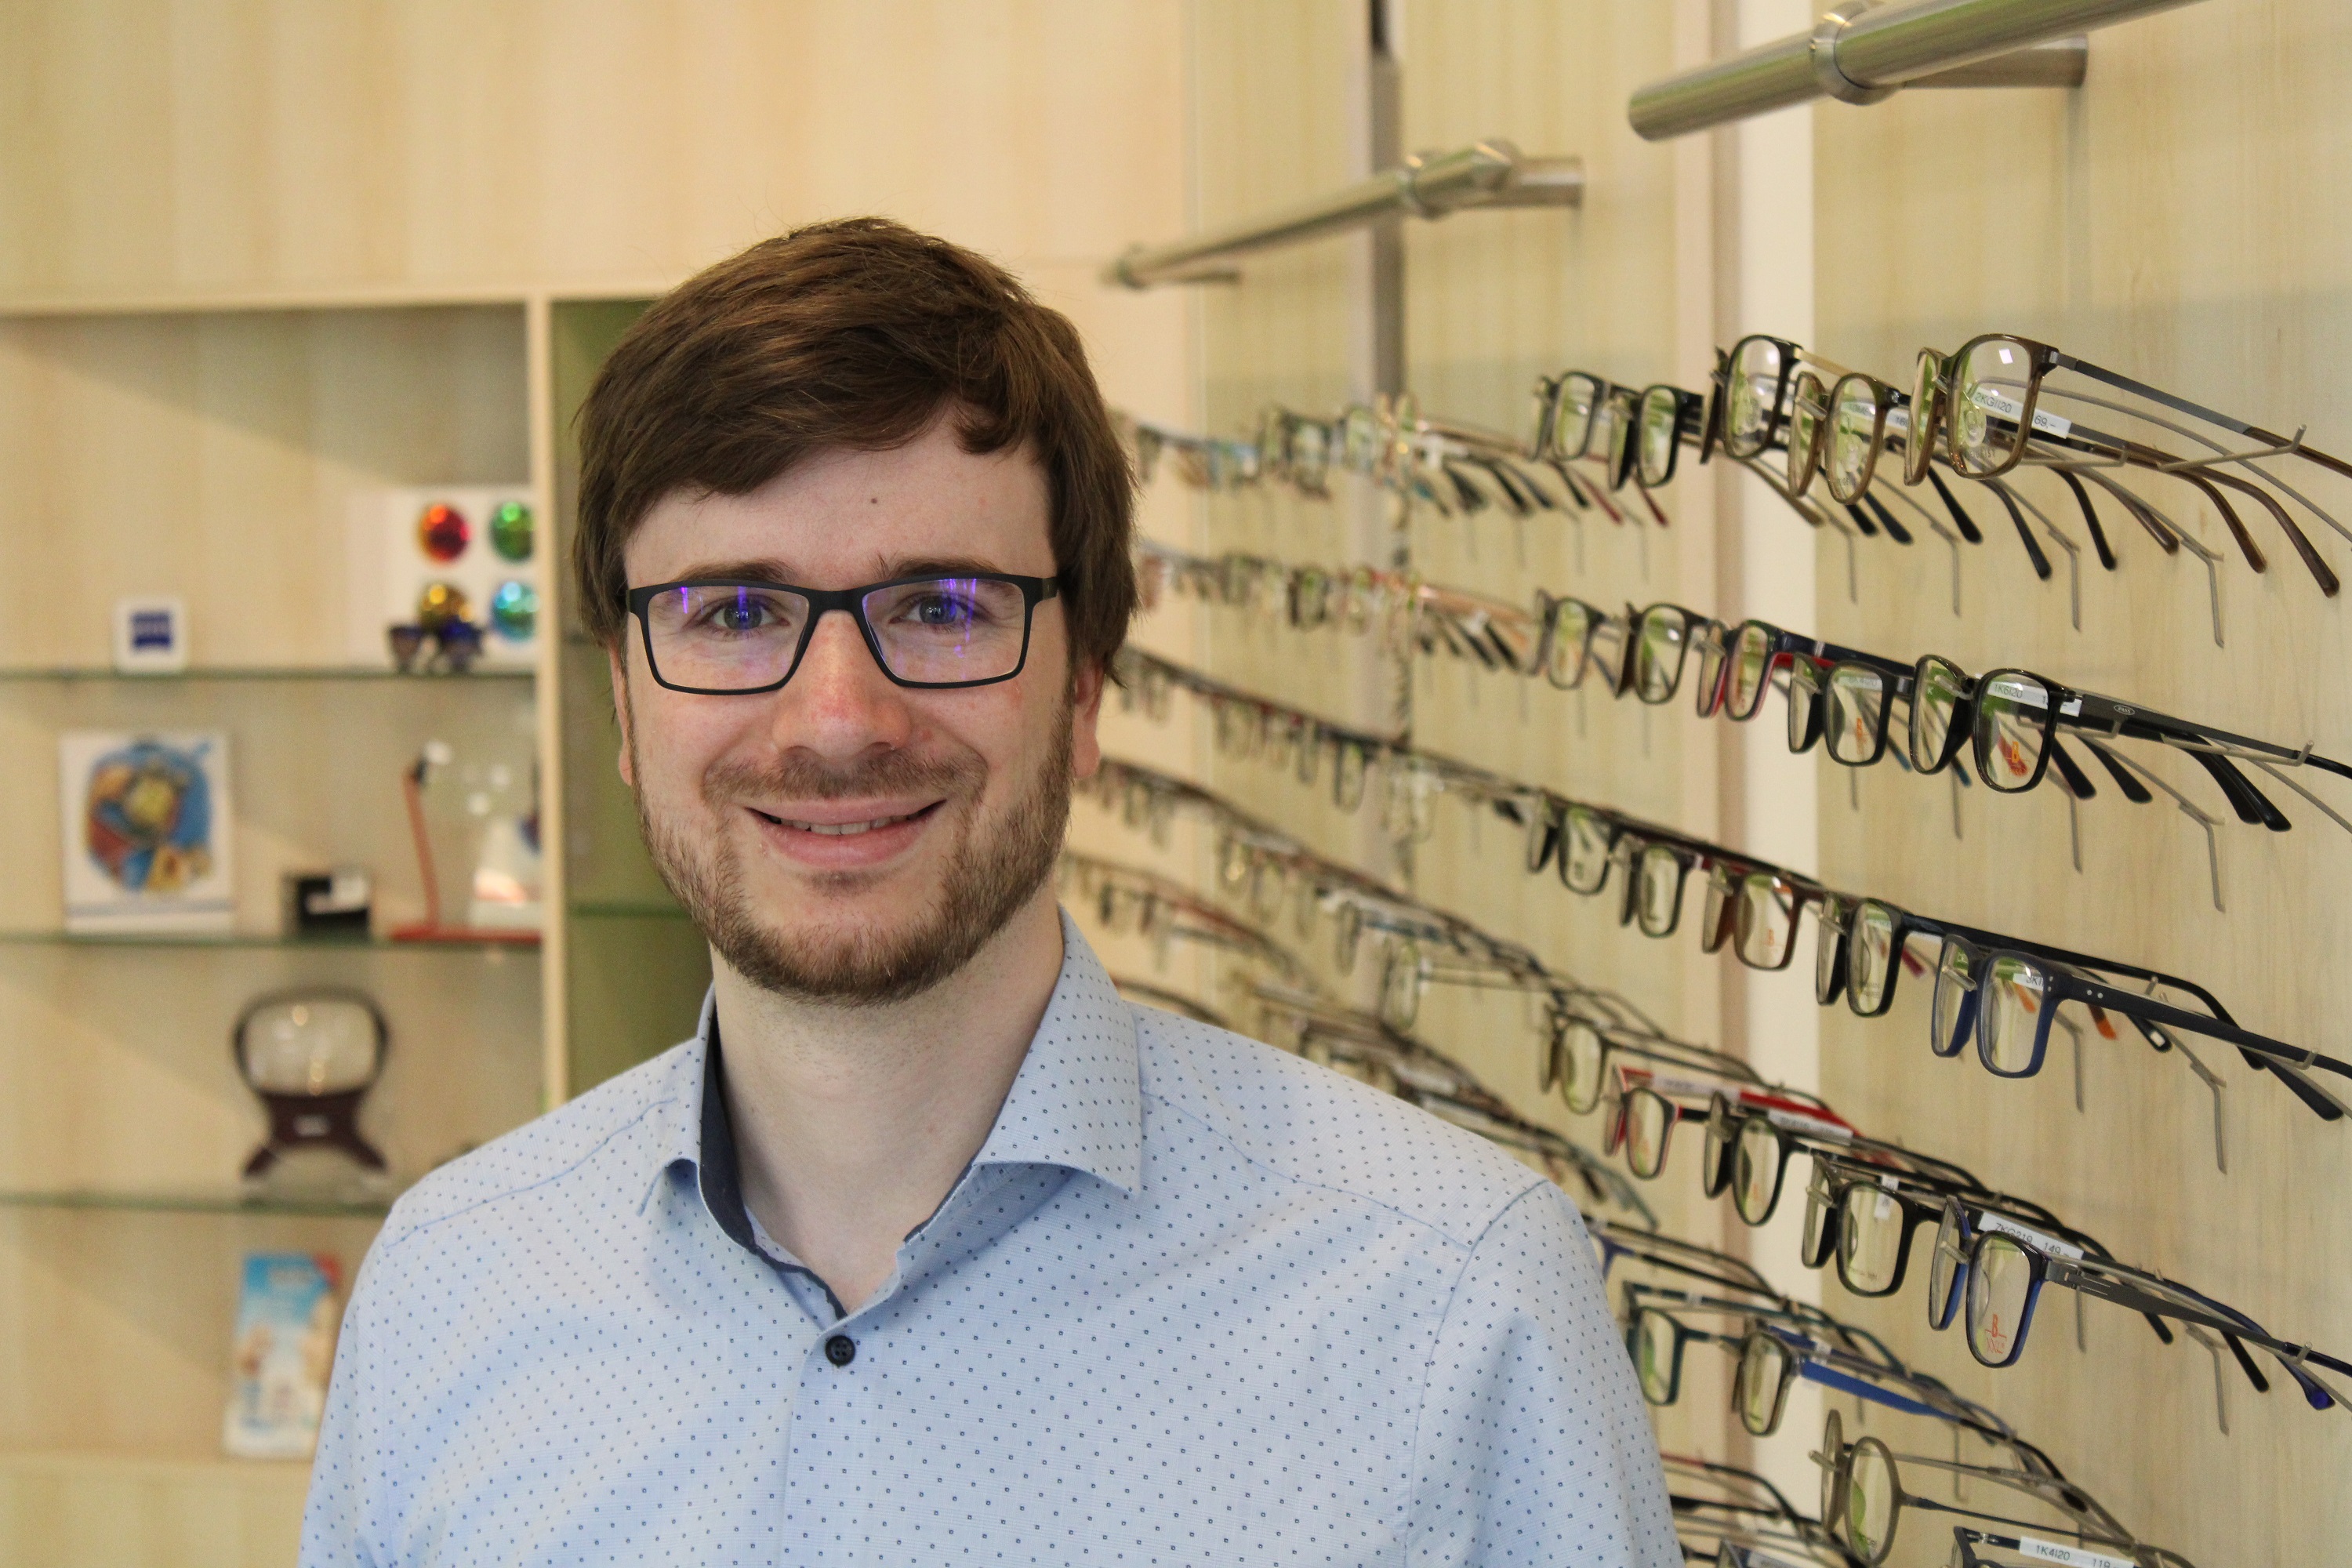 Augenoptiker Arne Engler hat schon mehrere Digital-Projekte gestartet.